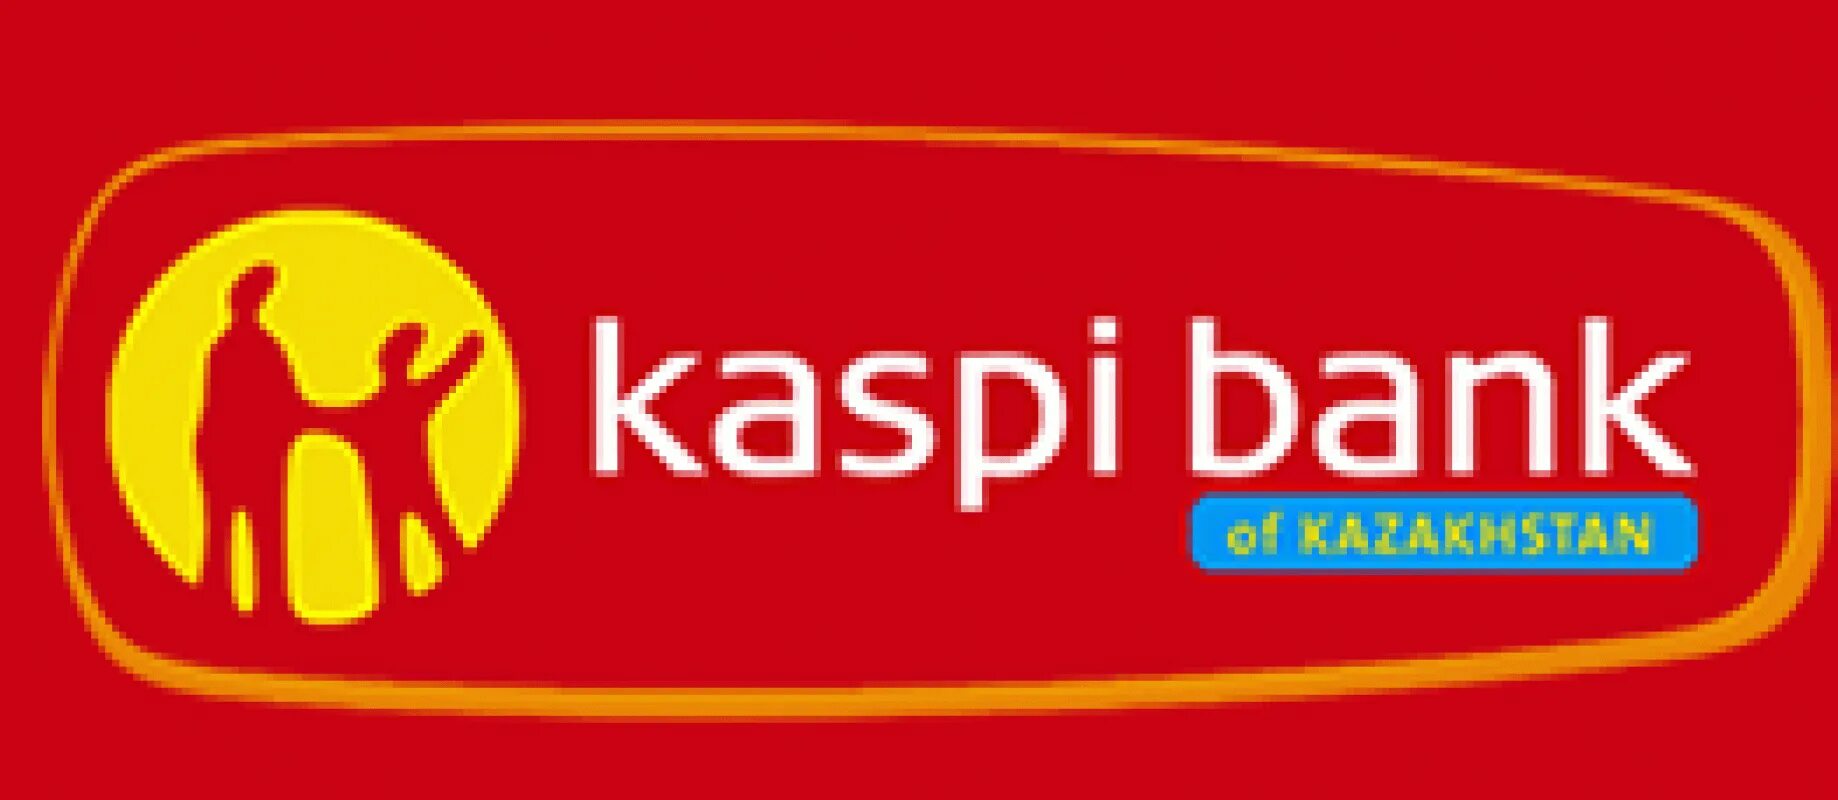 Kaspi c. Каспи банк. Kaspi Bank логотип. Лого Каспи банка. Эмблема Каспий банка.